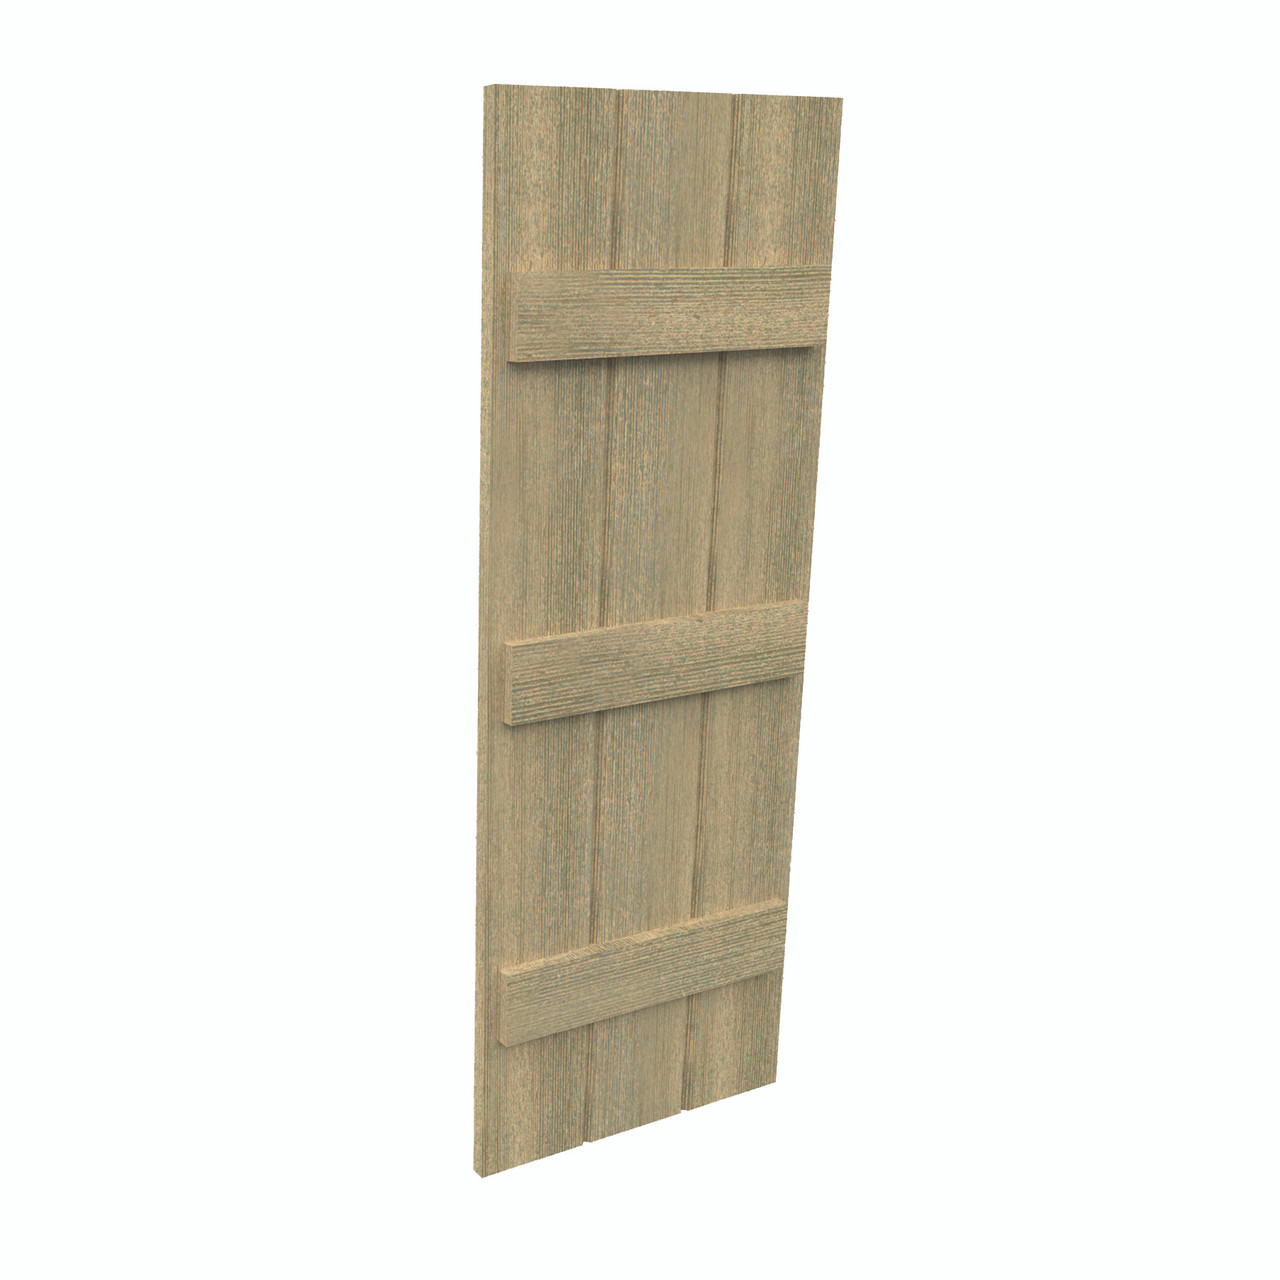 18 inch by 45 inch Plank Shutter with 3-Plank, 3-Batten